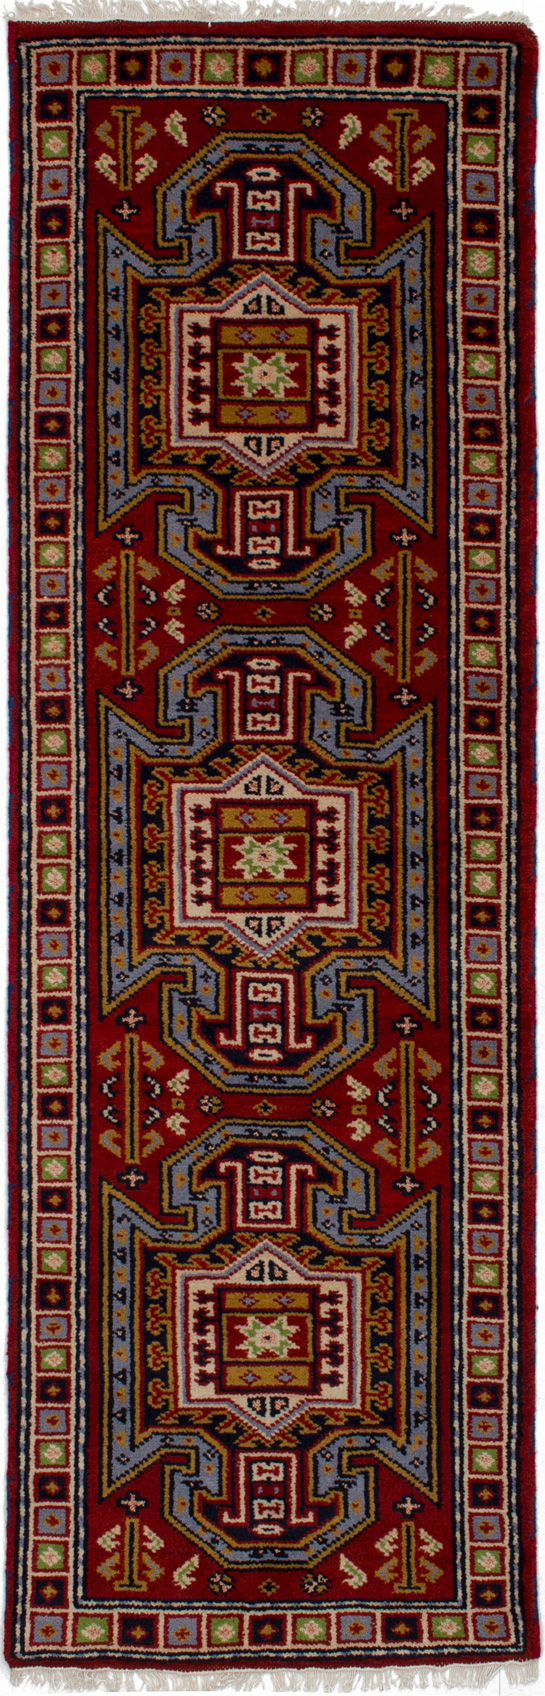 Hand-knotted Royal Kazak Dark Red Wool Rug 2'7" x 8'0"  Size: 2'7" x 8'0"  